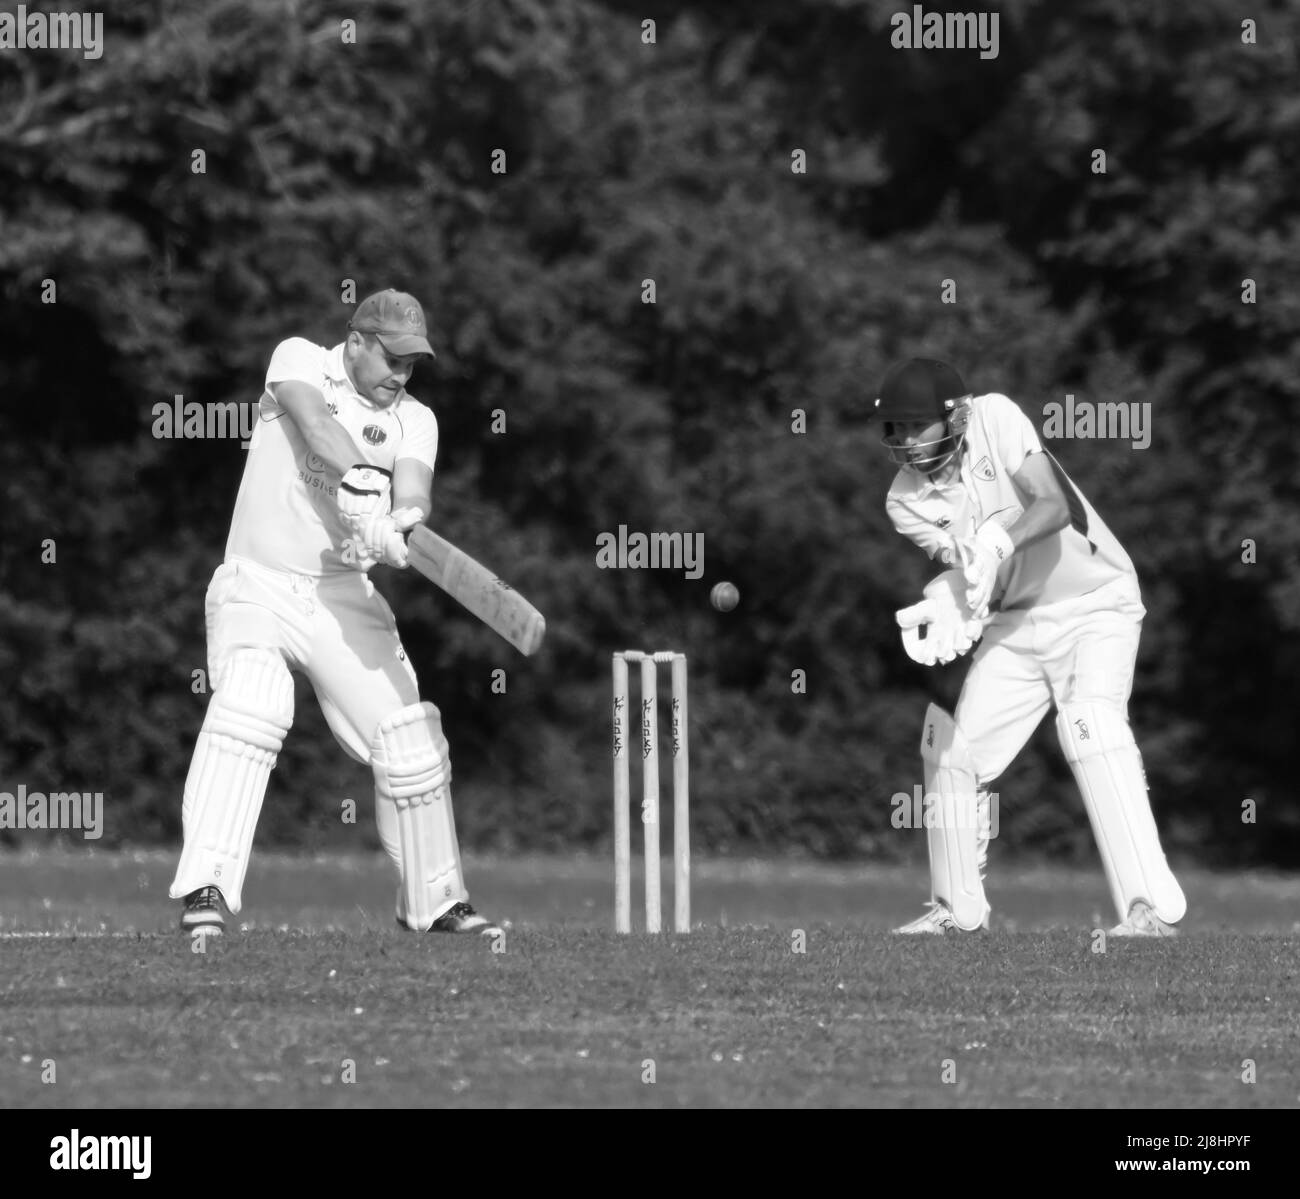 Village cricket in Hampshire, England Stock Photo